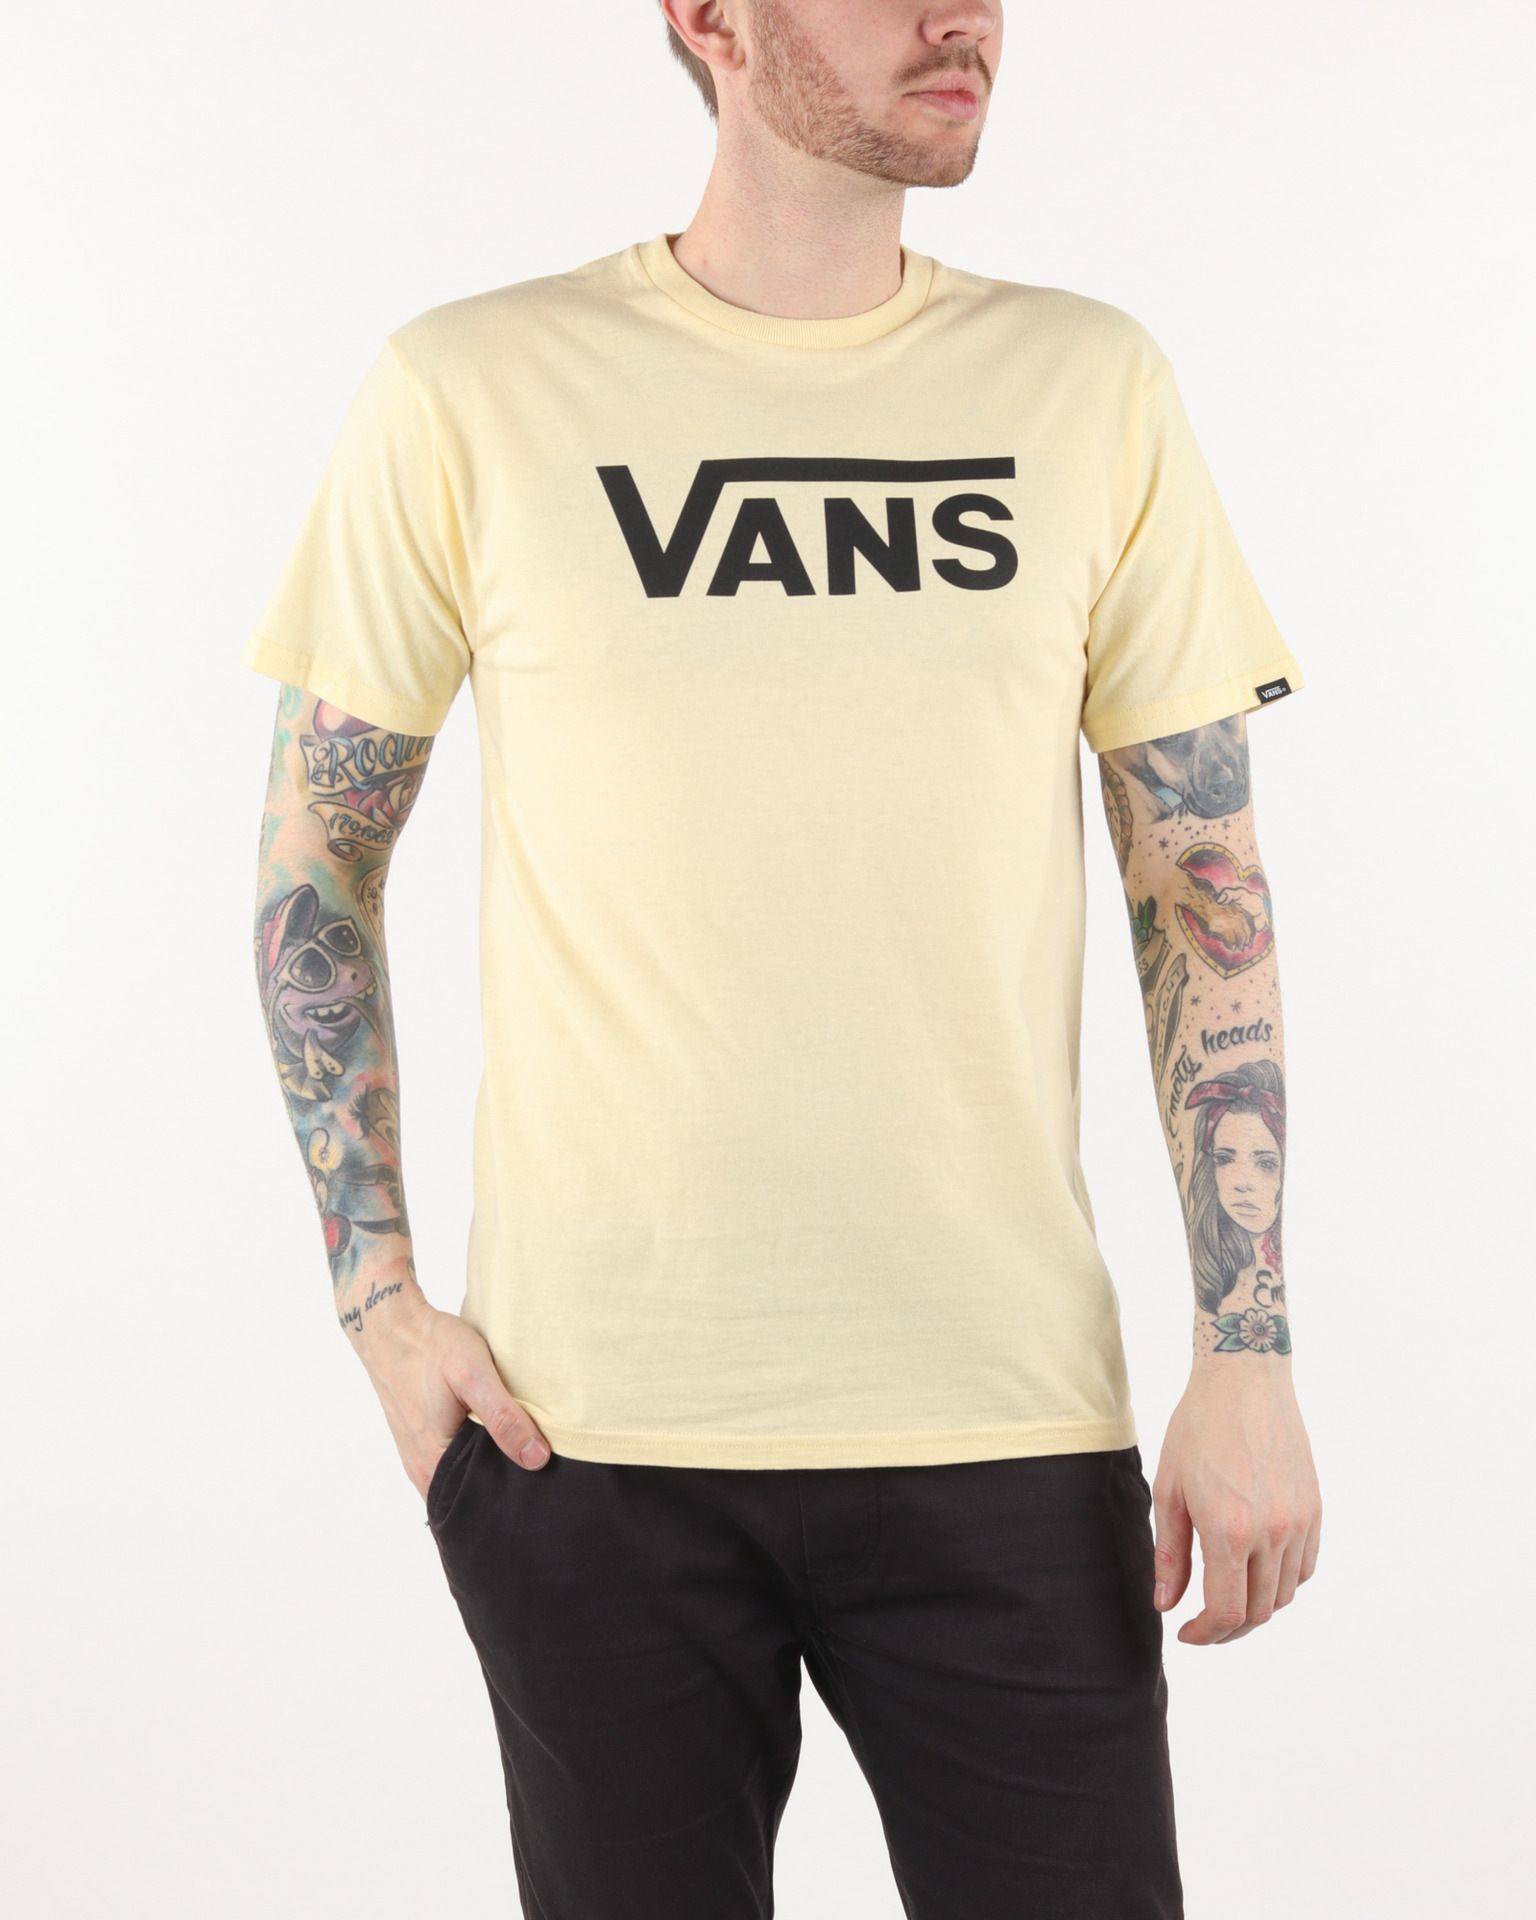 Vans - T-shirt Bibloo.com